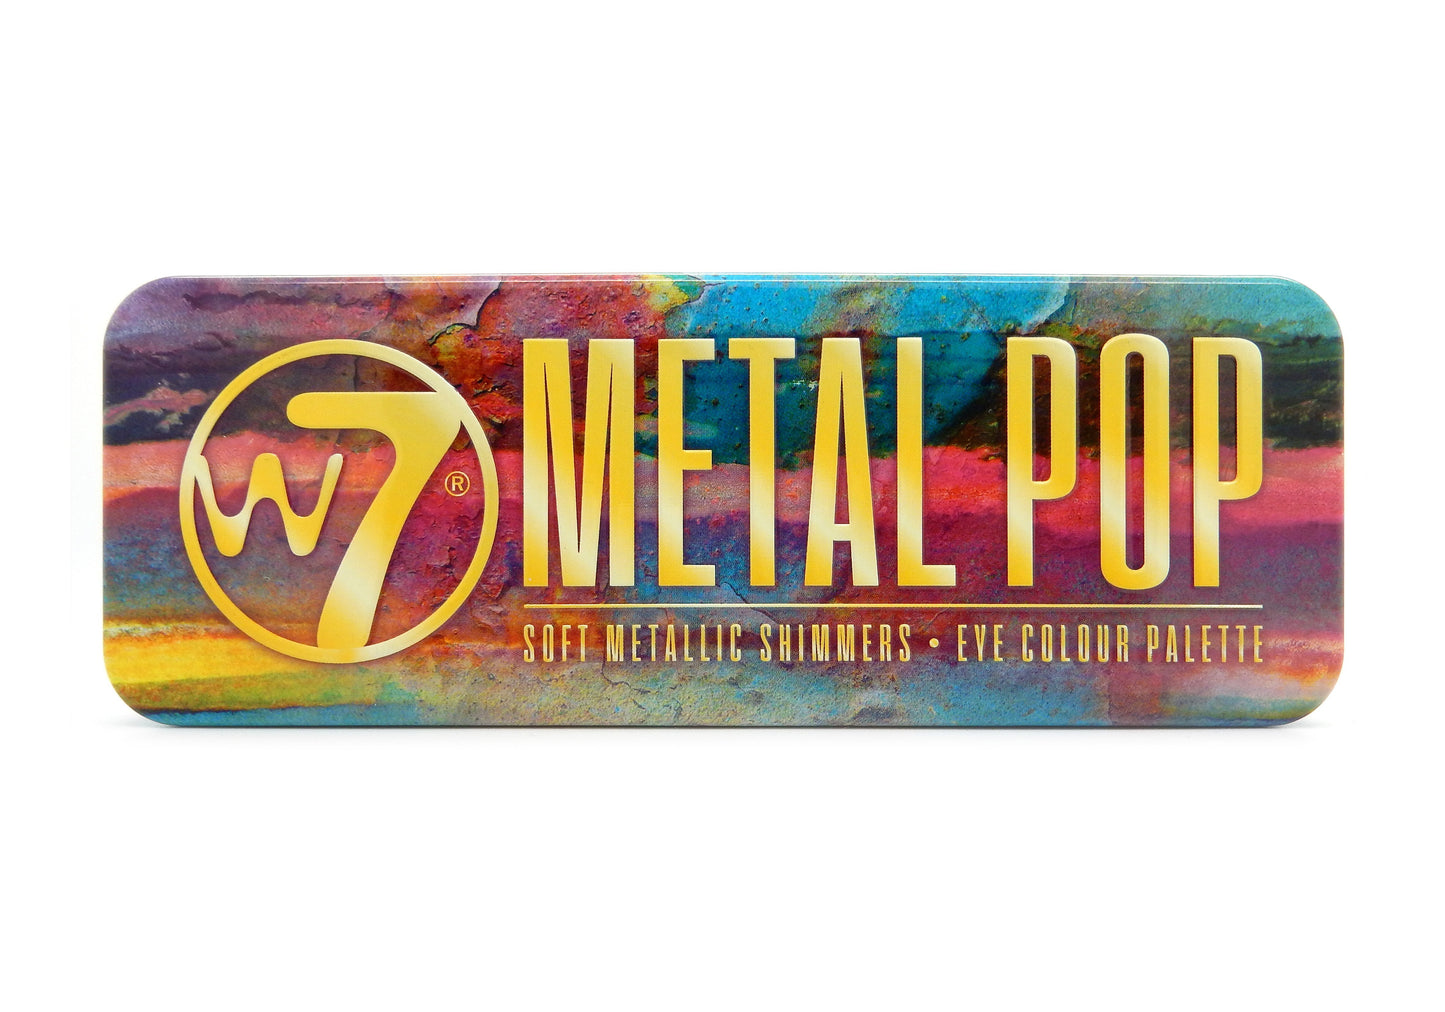 W7 COSMETICS Metal Pop -Metallic Shimmers Eyeshadow Palette - ADDROS.COM